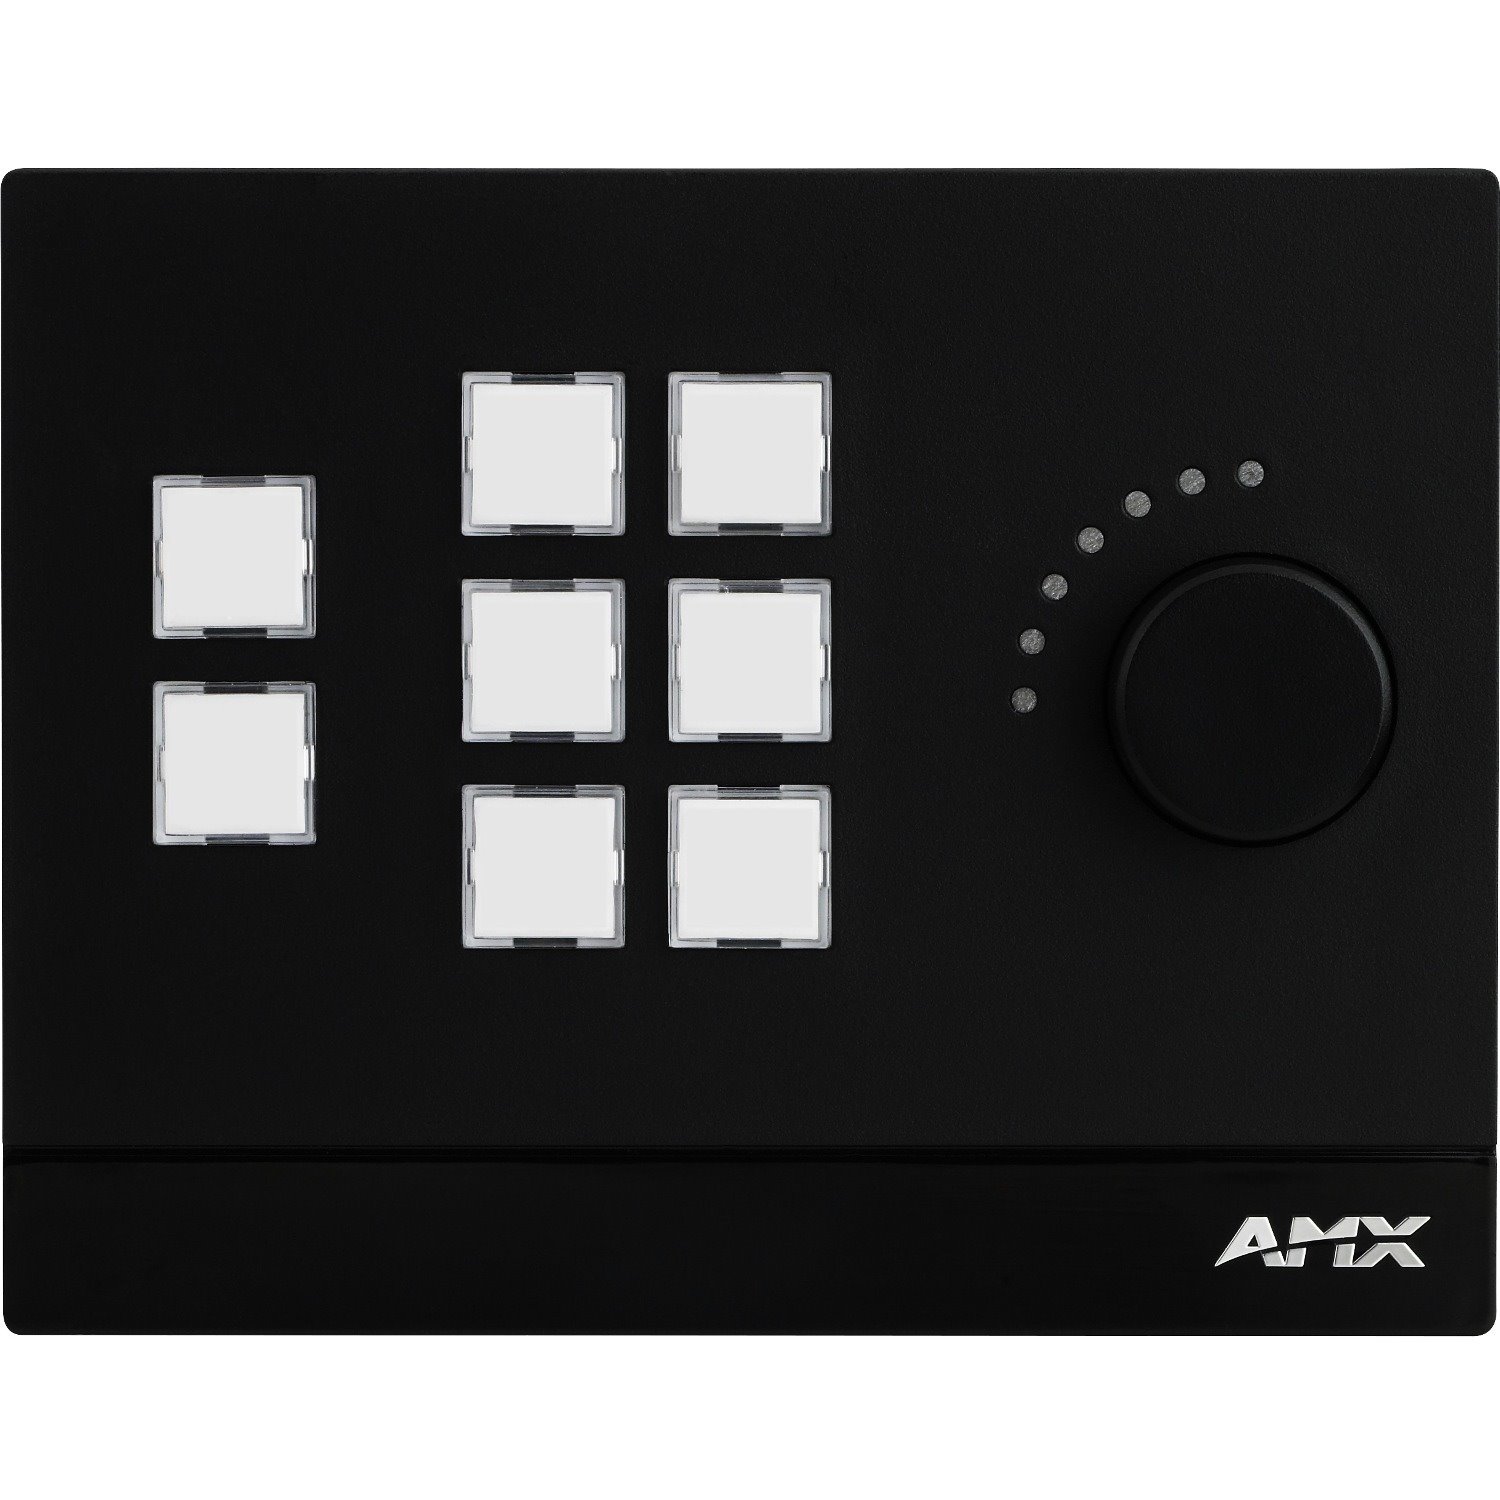 AMX Massio 8-Button ControlPad with Knob (US, UK, EU)